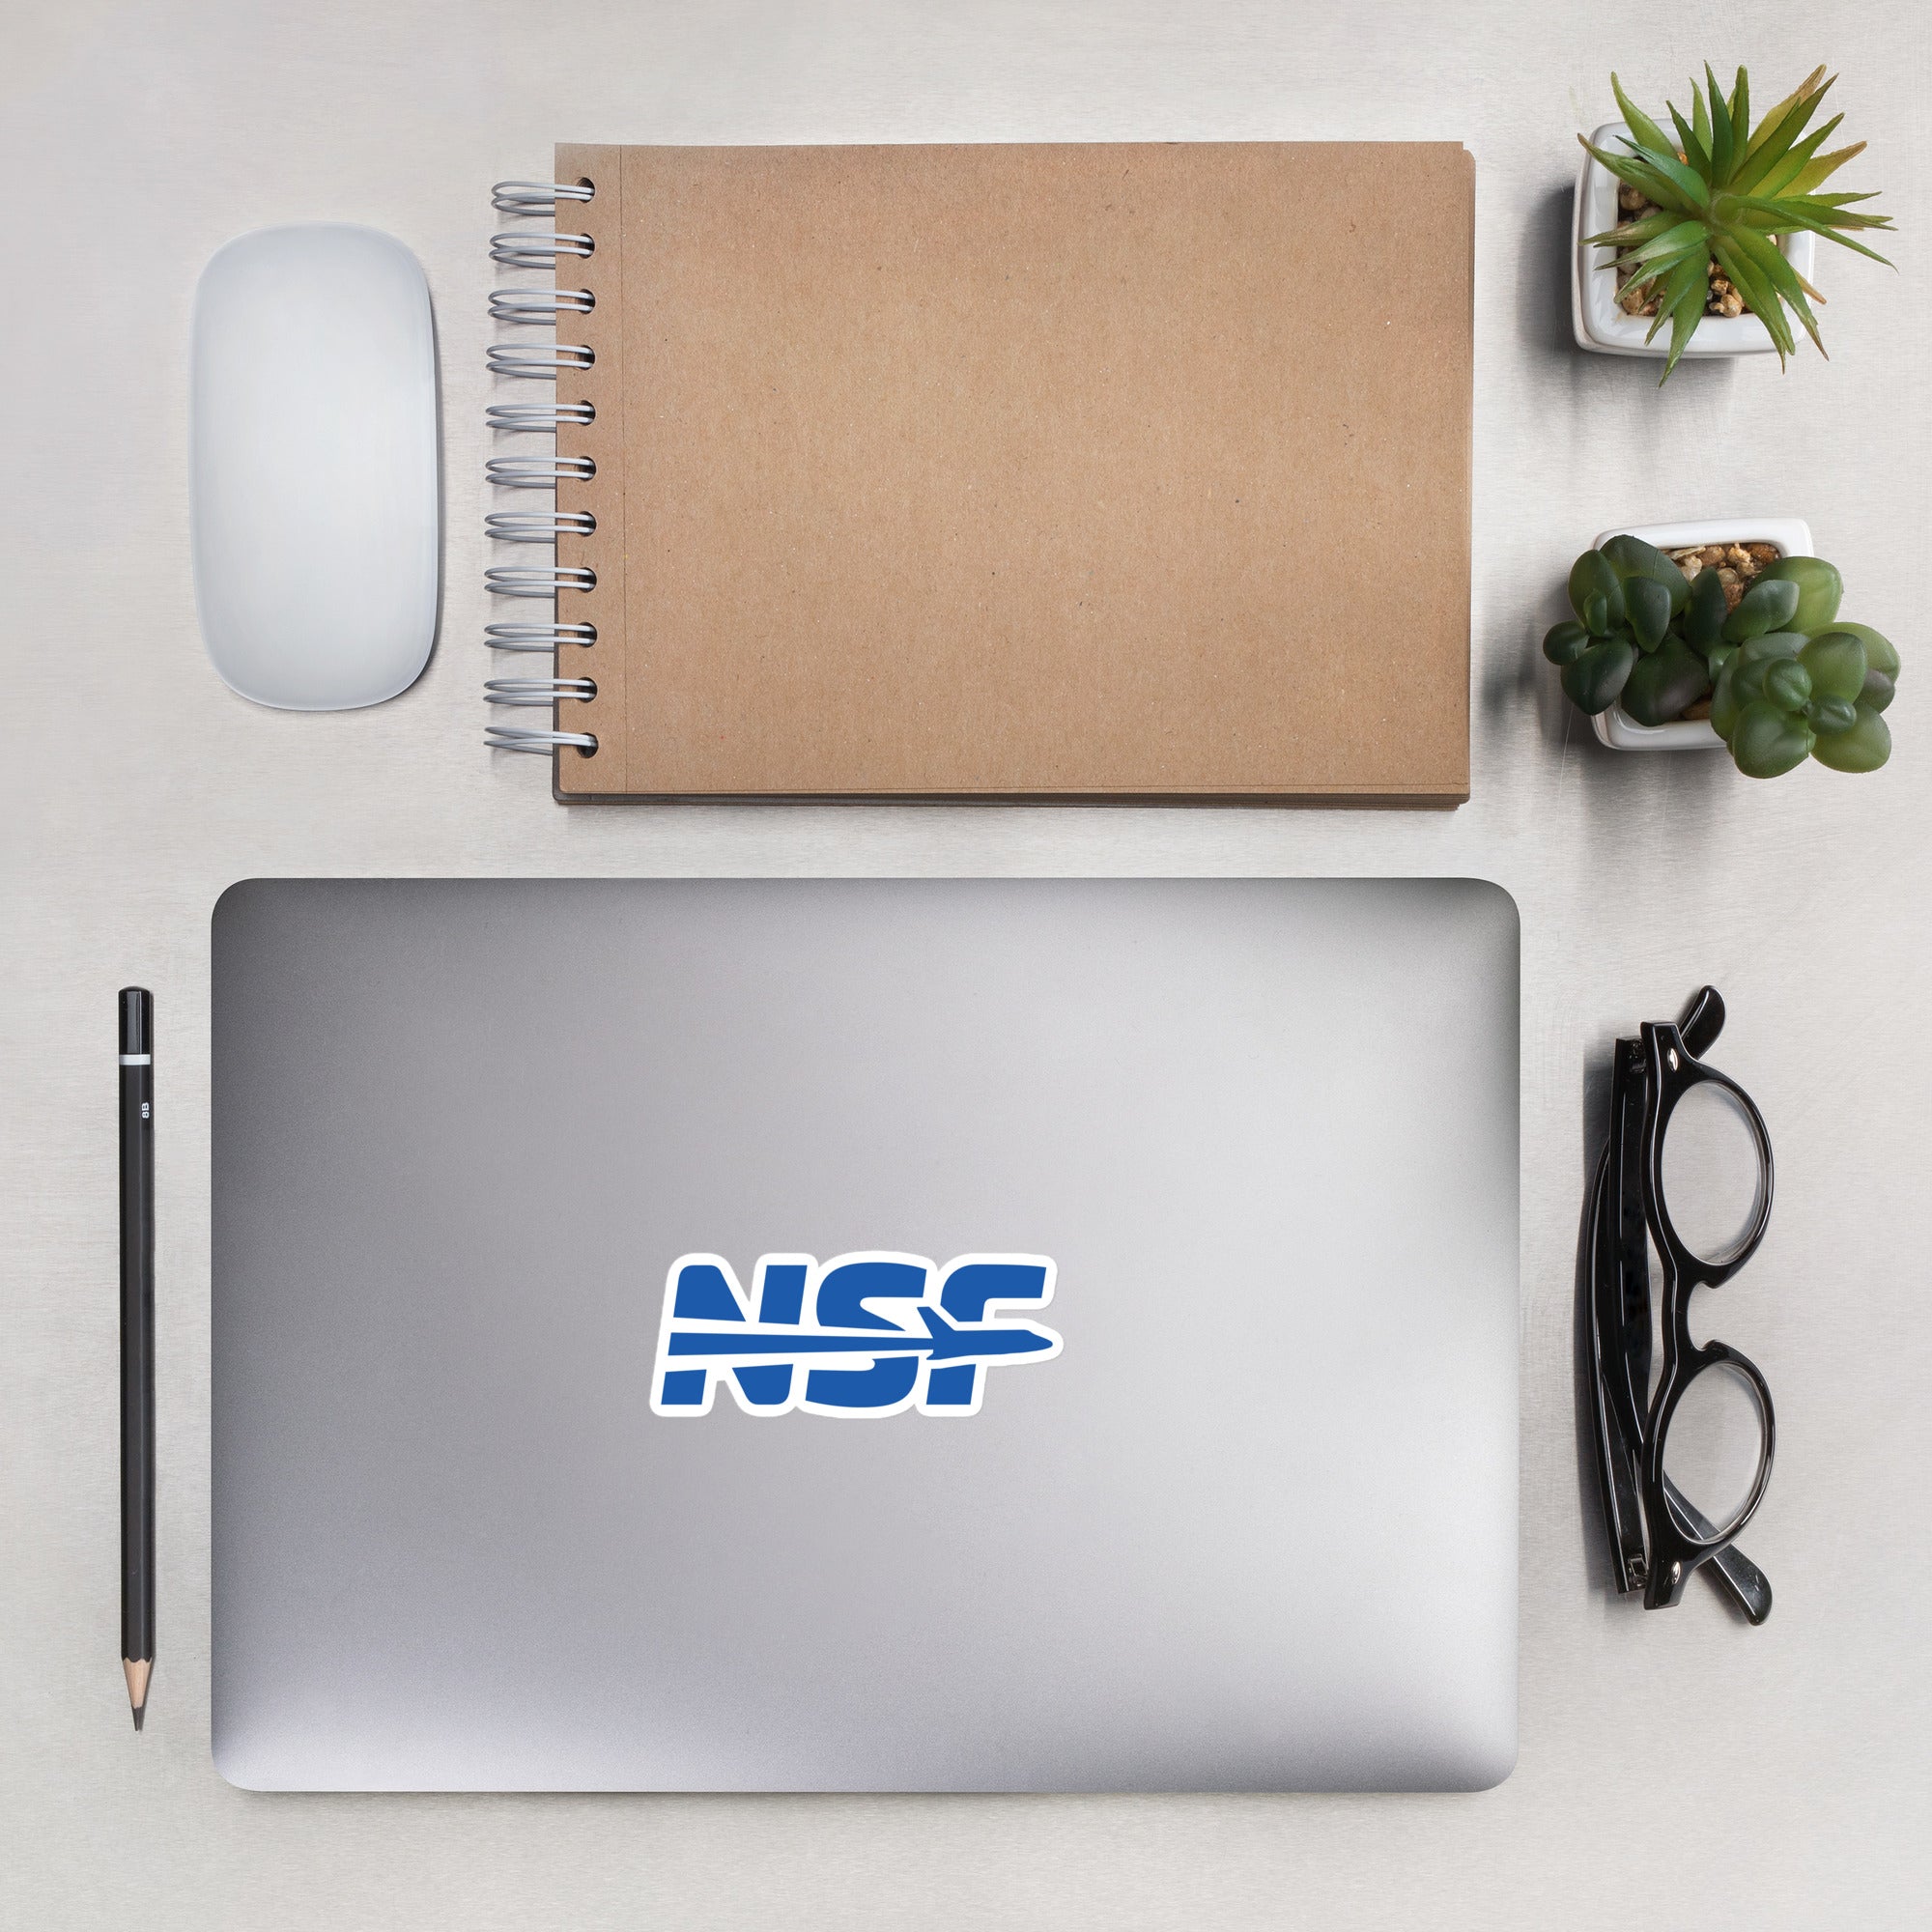 NSF Logo Sticker